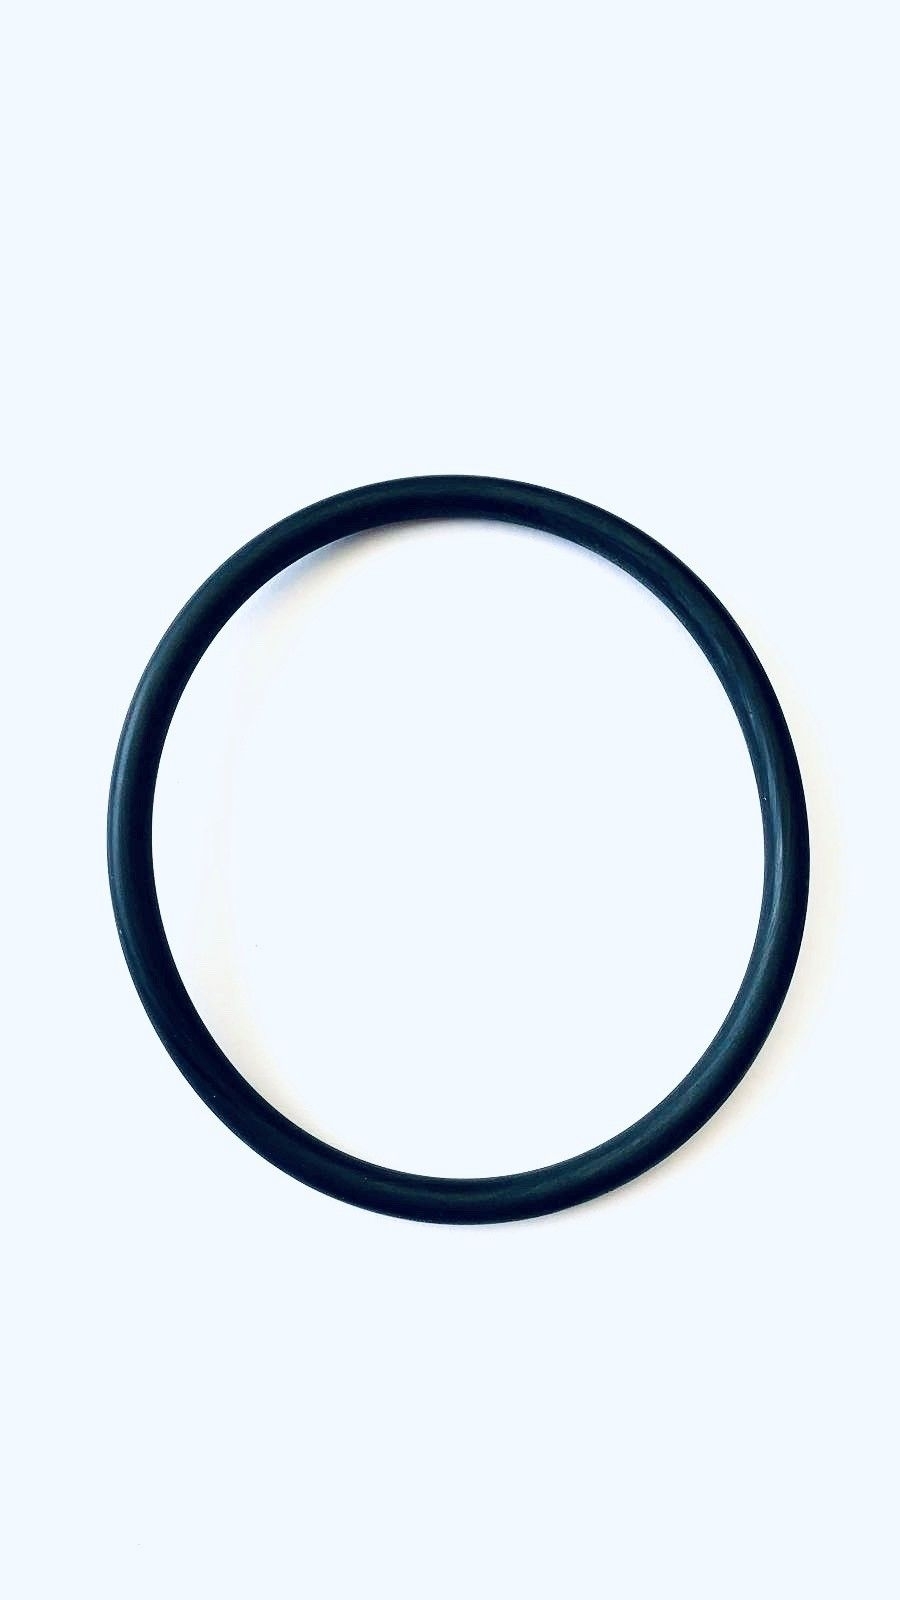 YATO Profi O-Ring Sortiment 419 tlg., 3-50mm, aus NBR, säure